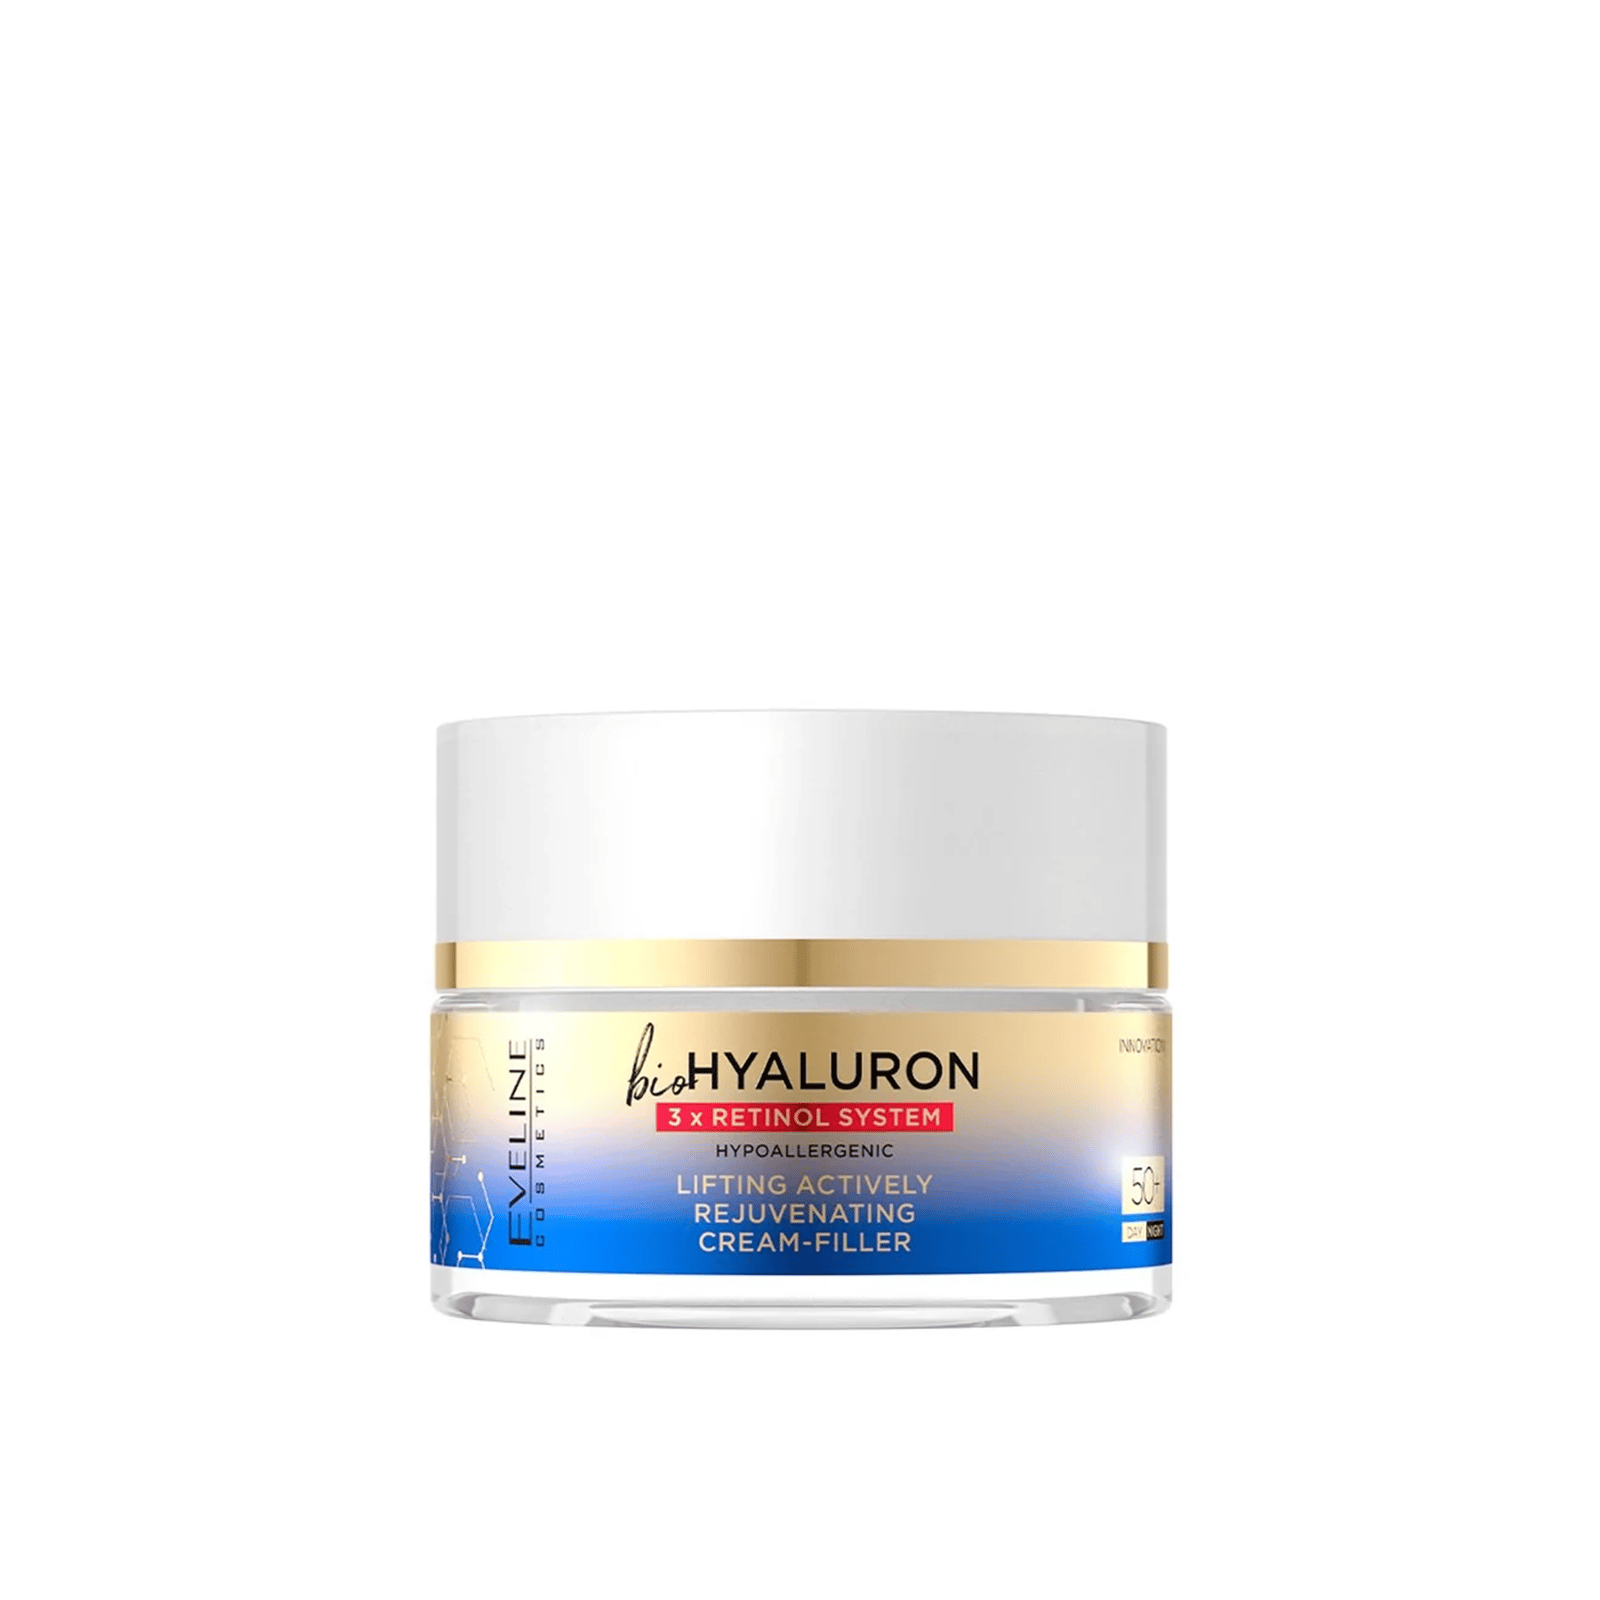 Eveline Cosmetics BioHyaluron 3x Retinol System 50+ Lifting Actively Rejuvenating Cream 50ml (1.76 fl oz)